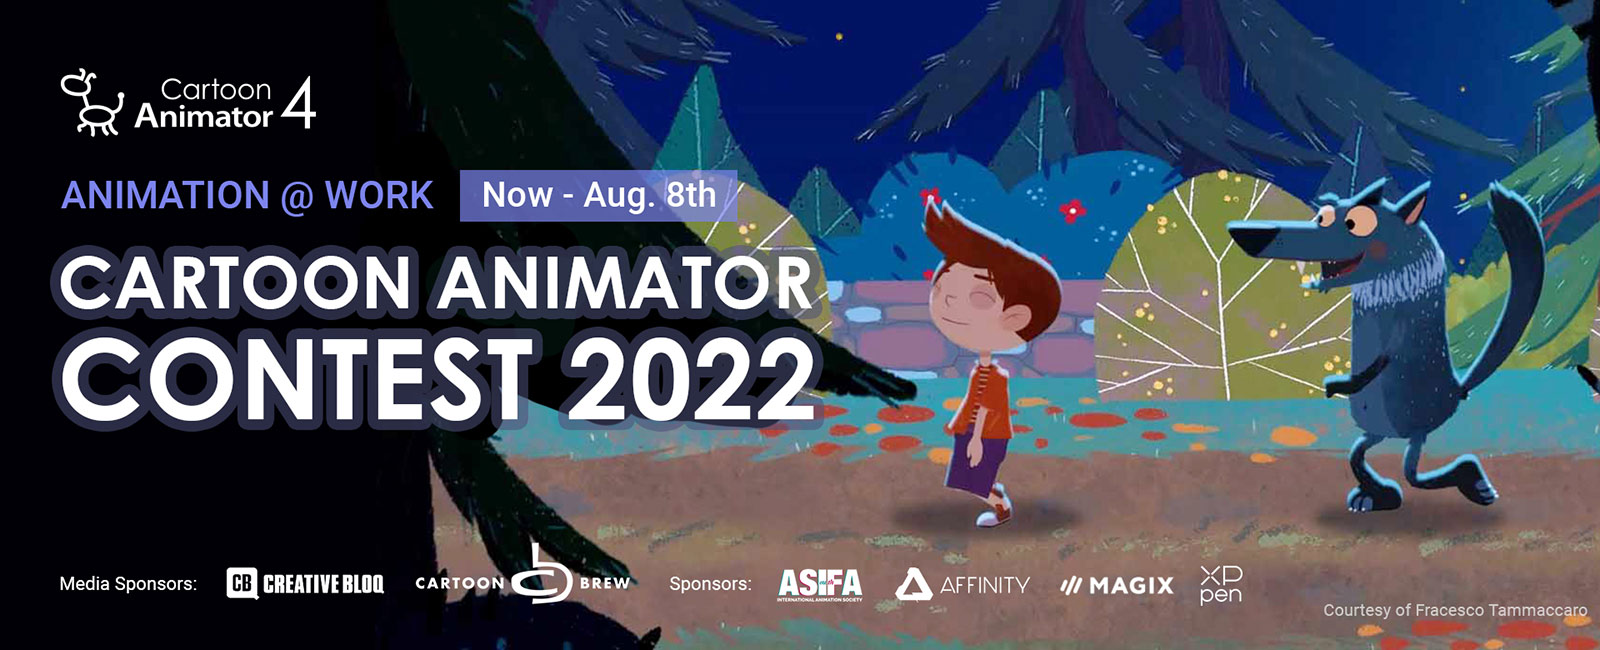 Cartoon Animator Contest 2022